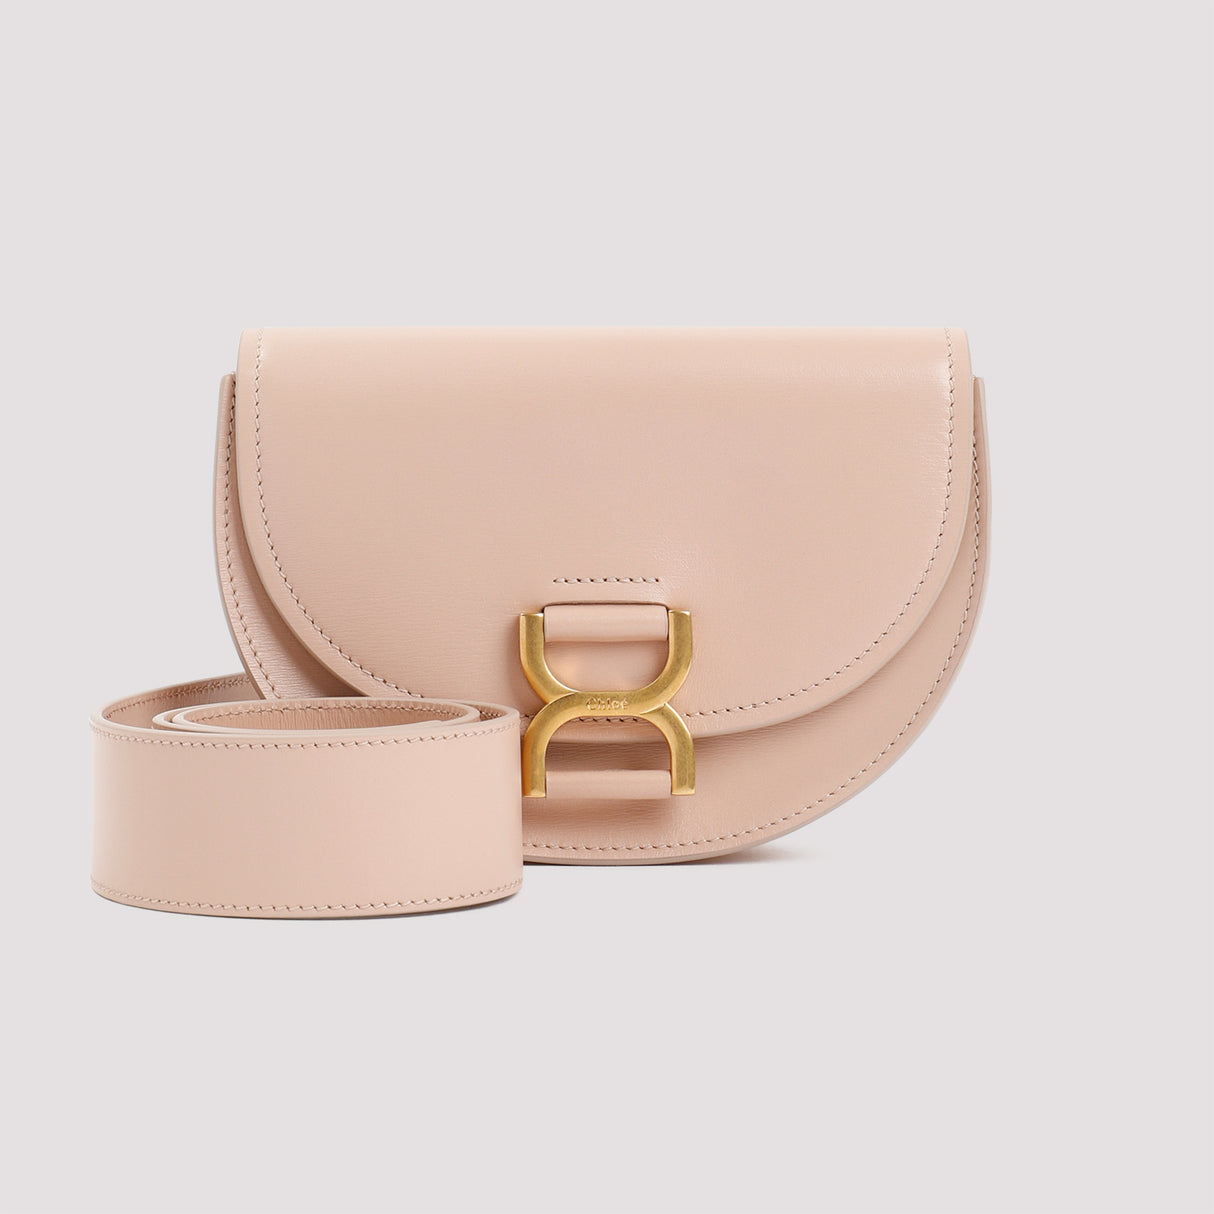 CHLOÉ Powd Beige Leather Shoulder Bag for Women - FW23 Collection